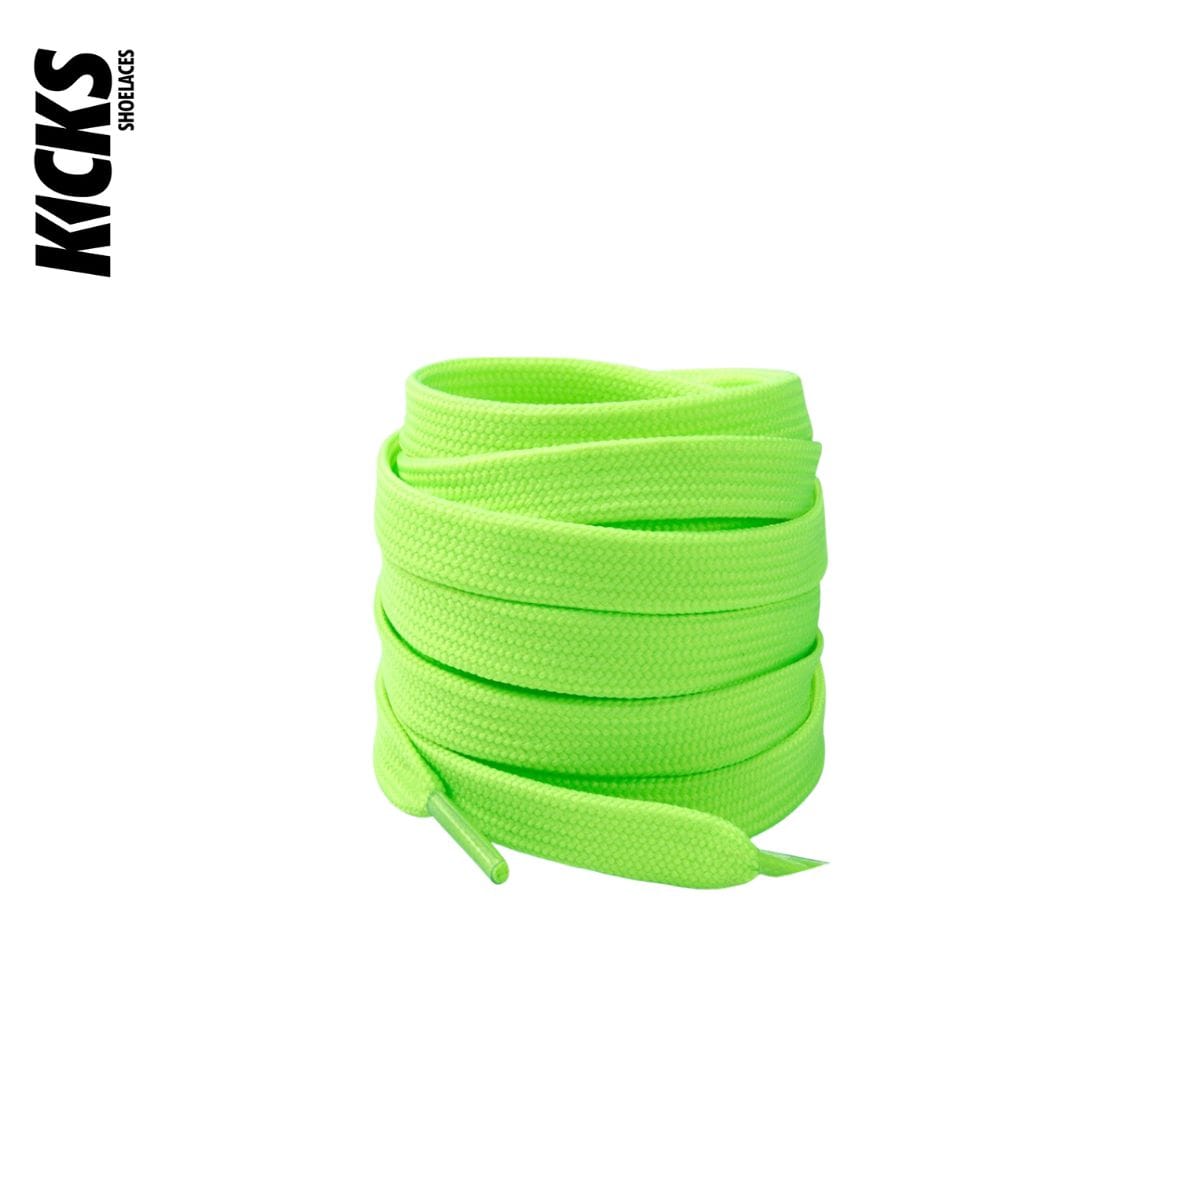 Nike Dunks Shoelace Replacements - Kicks Shoelaces